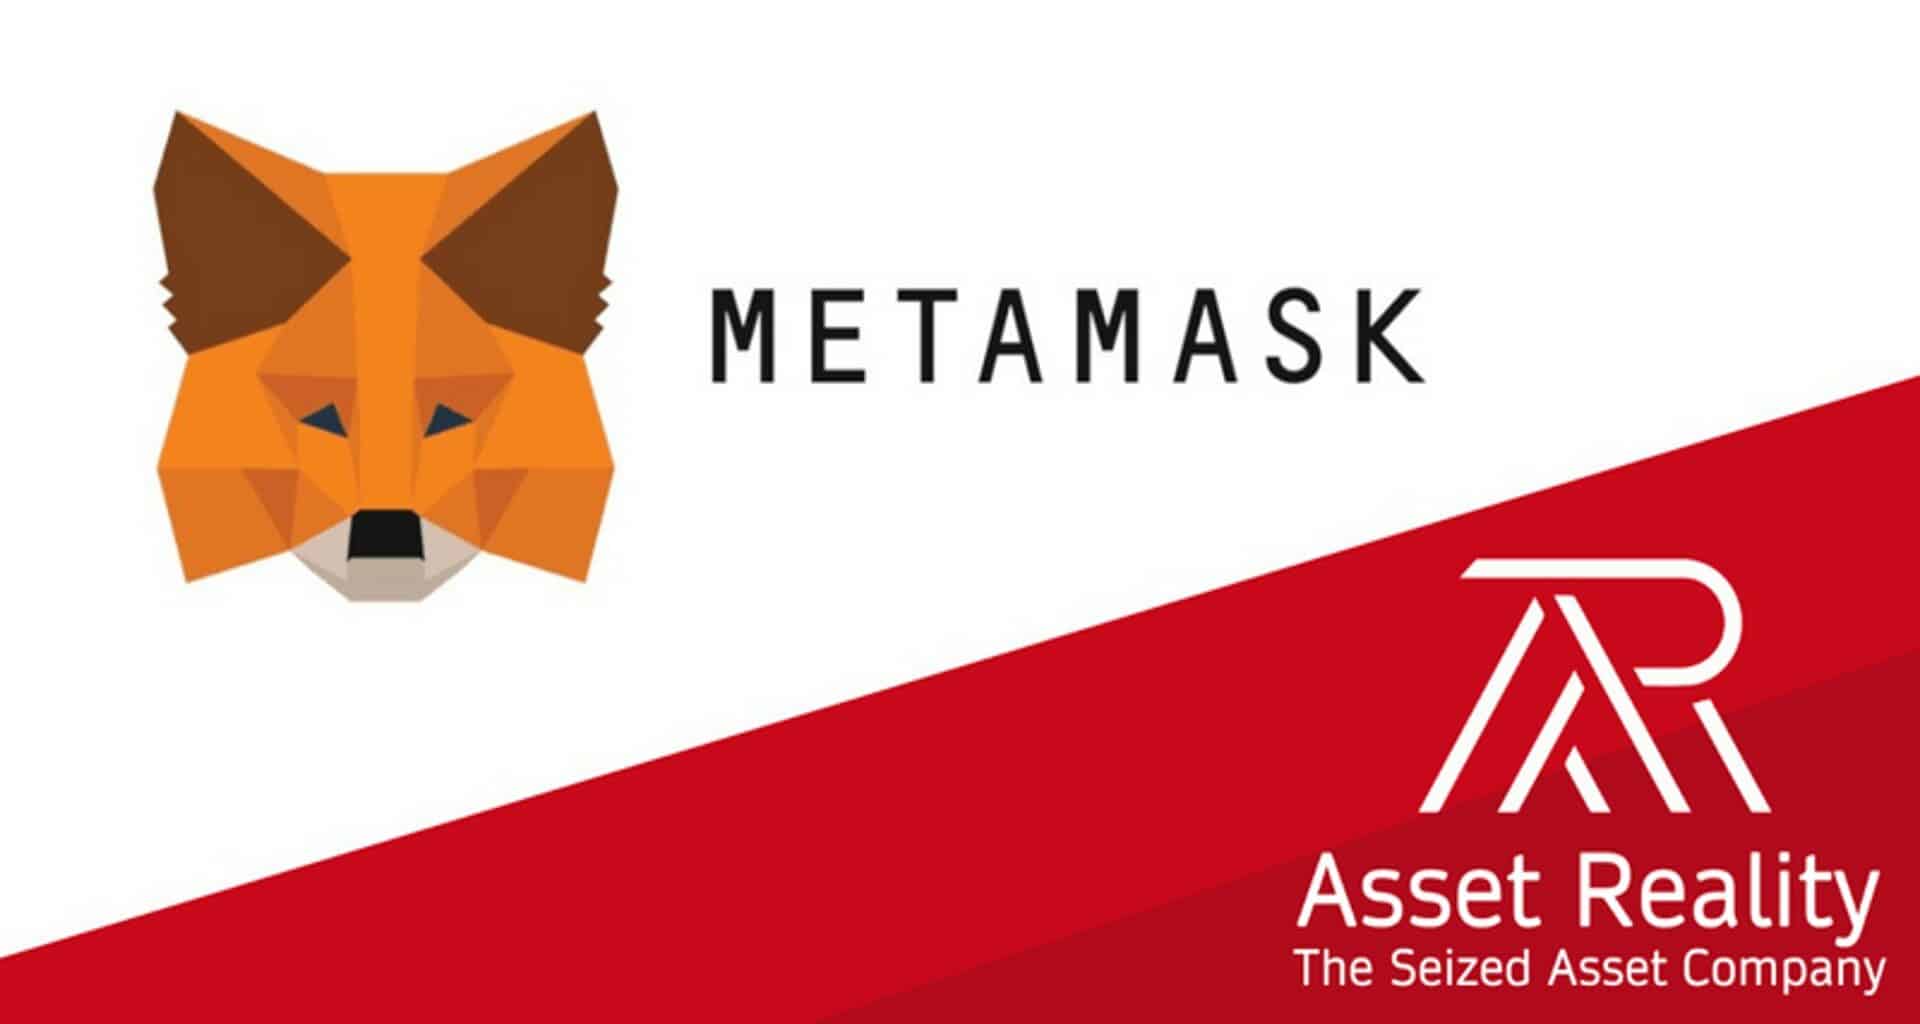 Metamask Asset Reality